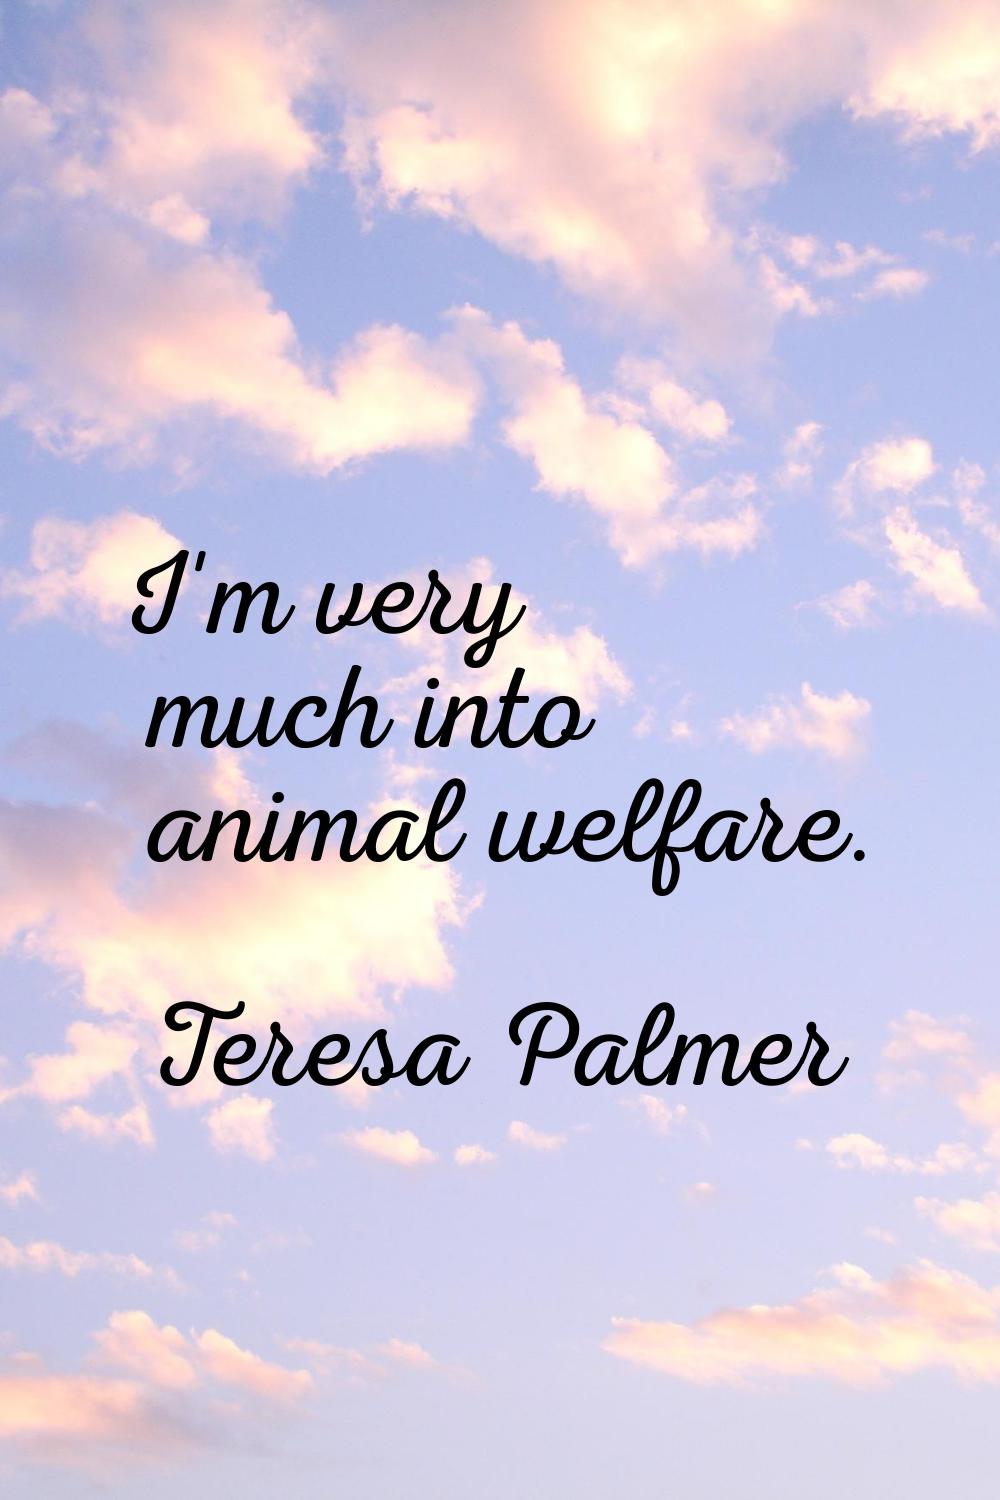 I'm very much into animal welfare.